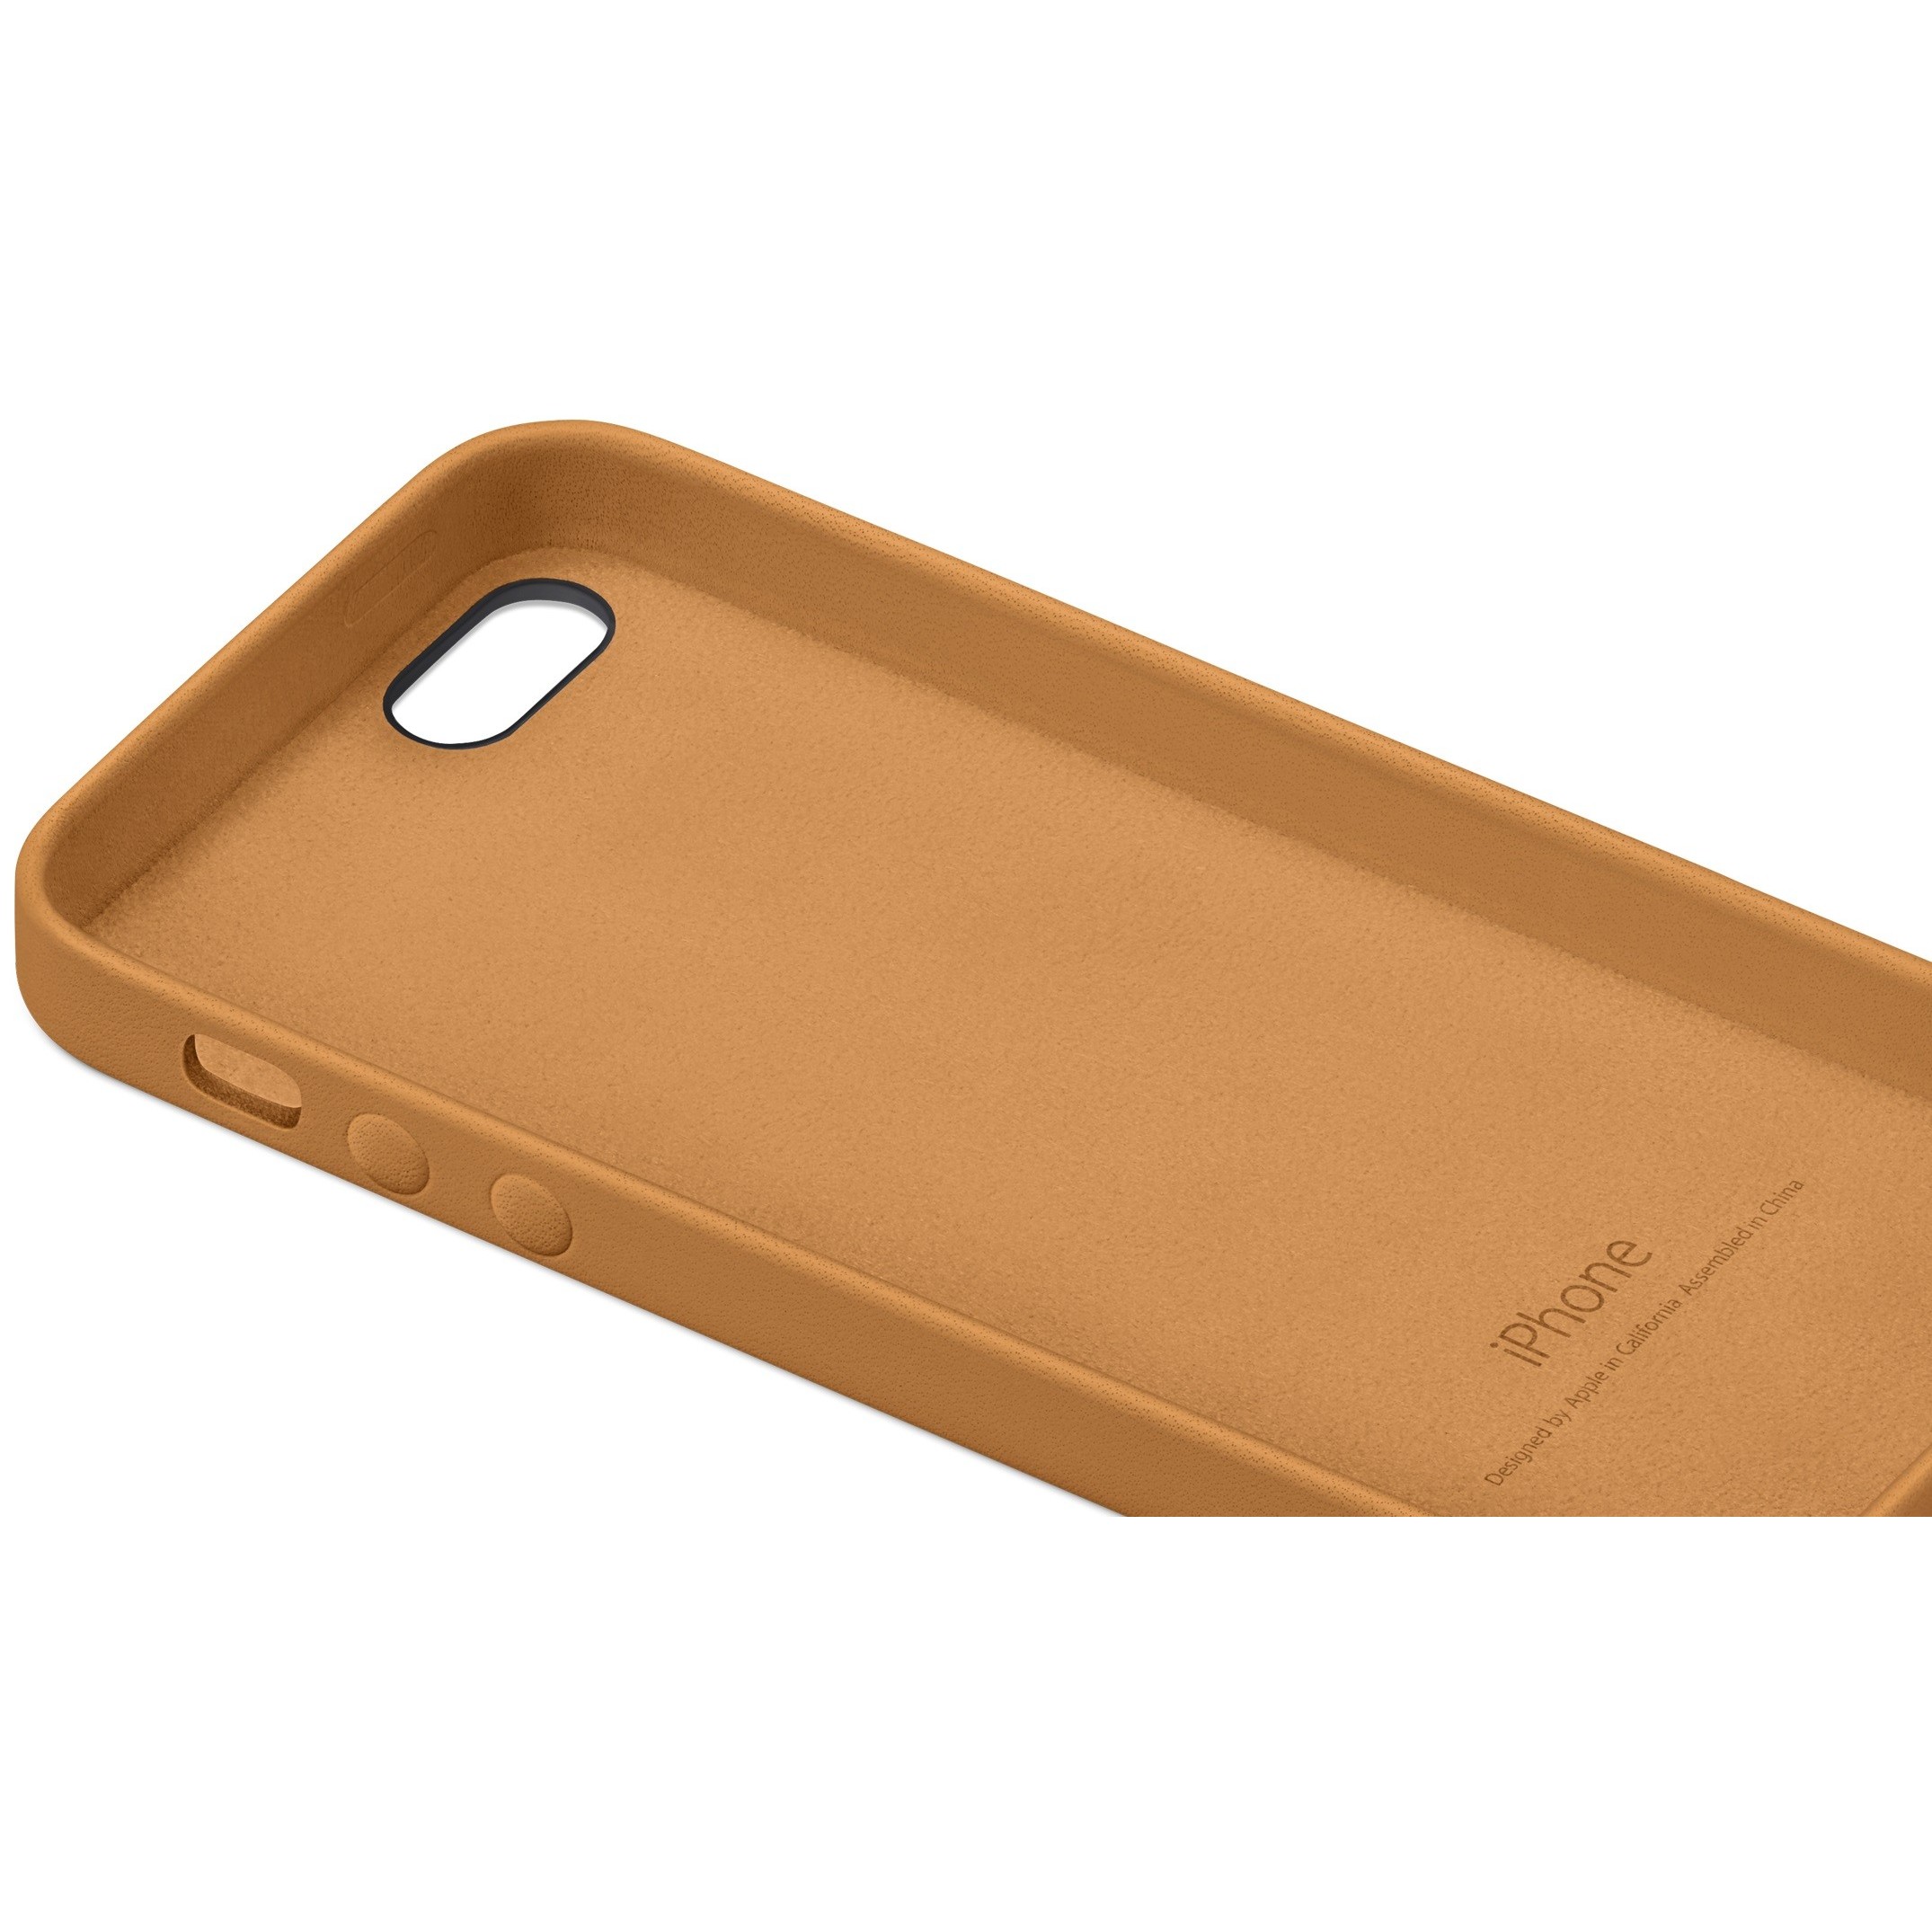 Apple телефон чехол. Apple Leather Case чехол для iphone 5/5s/se. Leather Case для iphone 5, 5s, se. Apple iphone se Leather Case. Чехол оригинальный Apple iphone 5s Case черный.